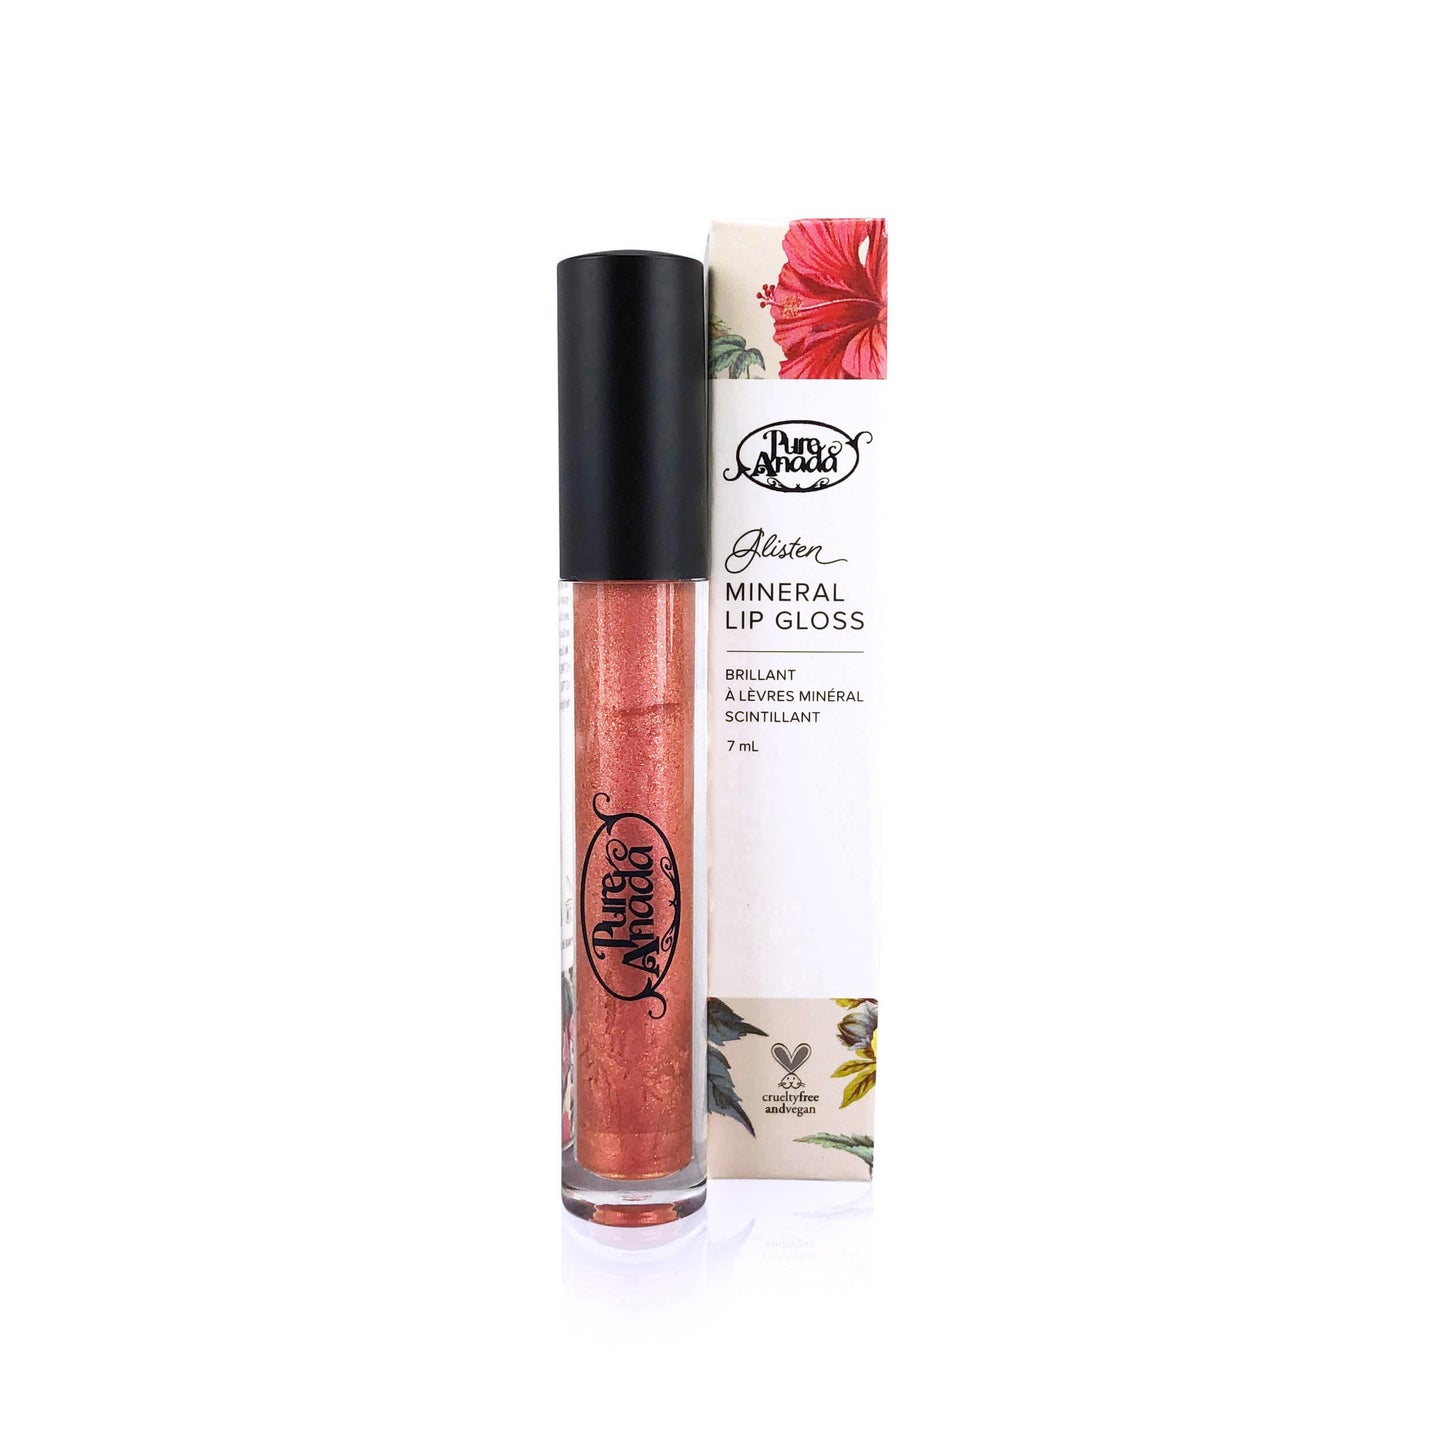 Glisten Mineral Lip Gloss - Rose Gold